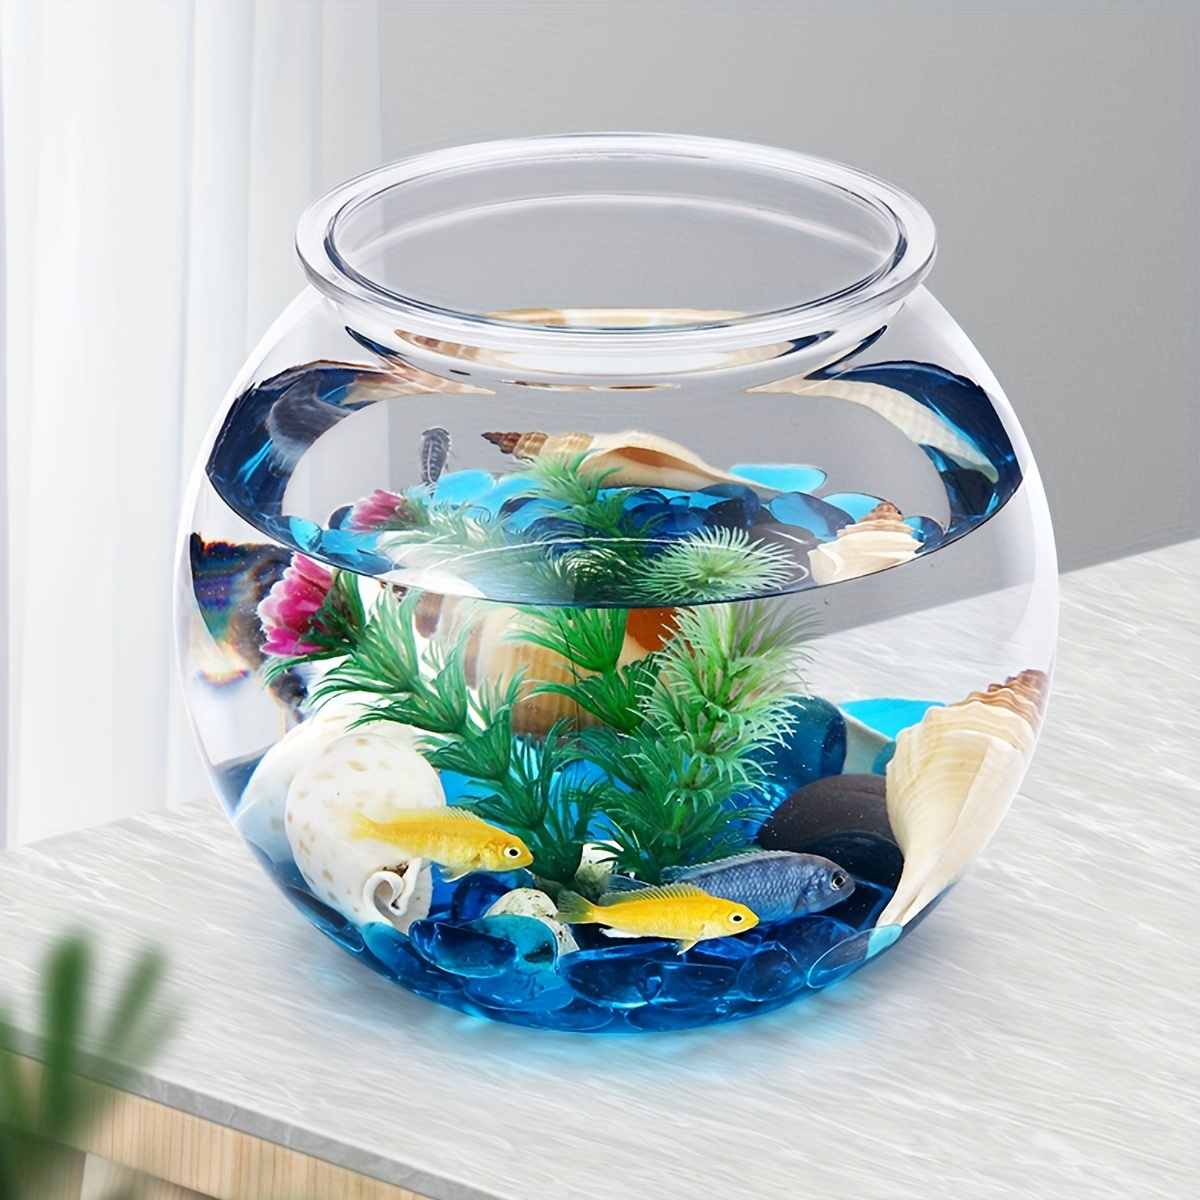 Clear Plastic Goldfish Bowl For Desk Or Bookshelf - Stylish Home Aquarium  Decoration